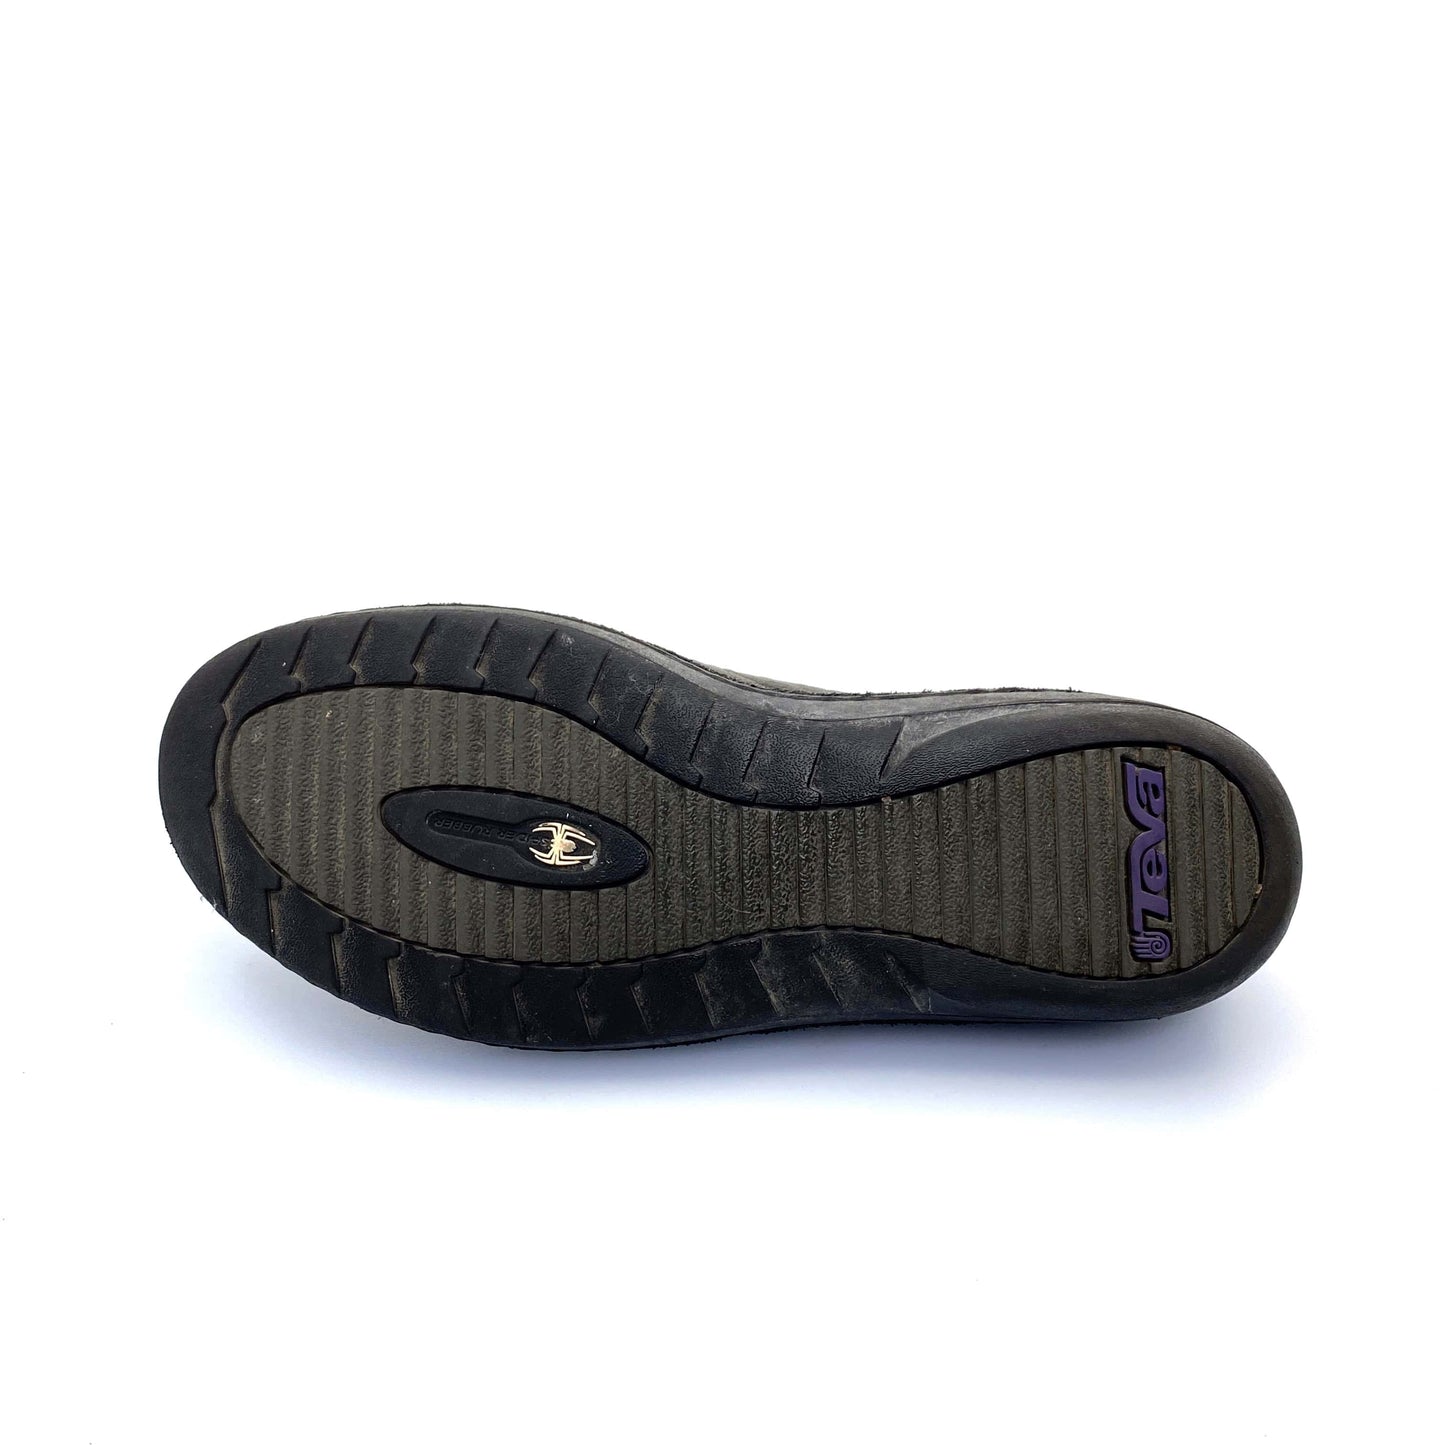 Teva Womens 8.5 Beluga Kiru Gray Nubuck Lined Mocs Shoes Spider Soles